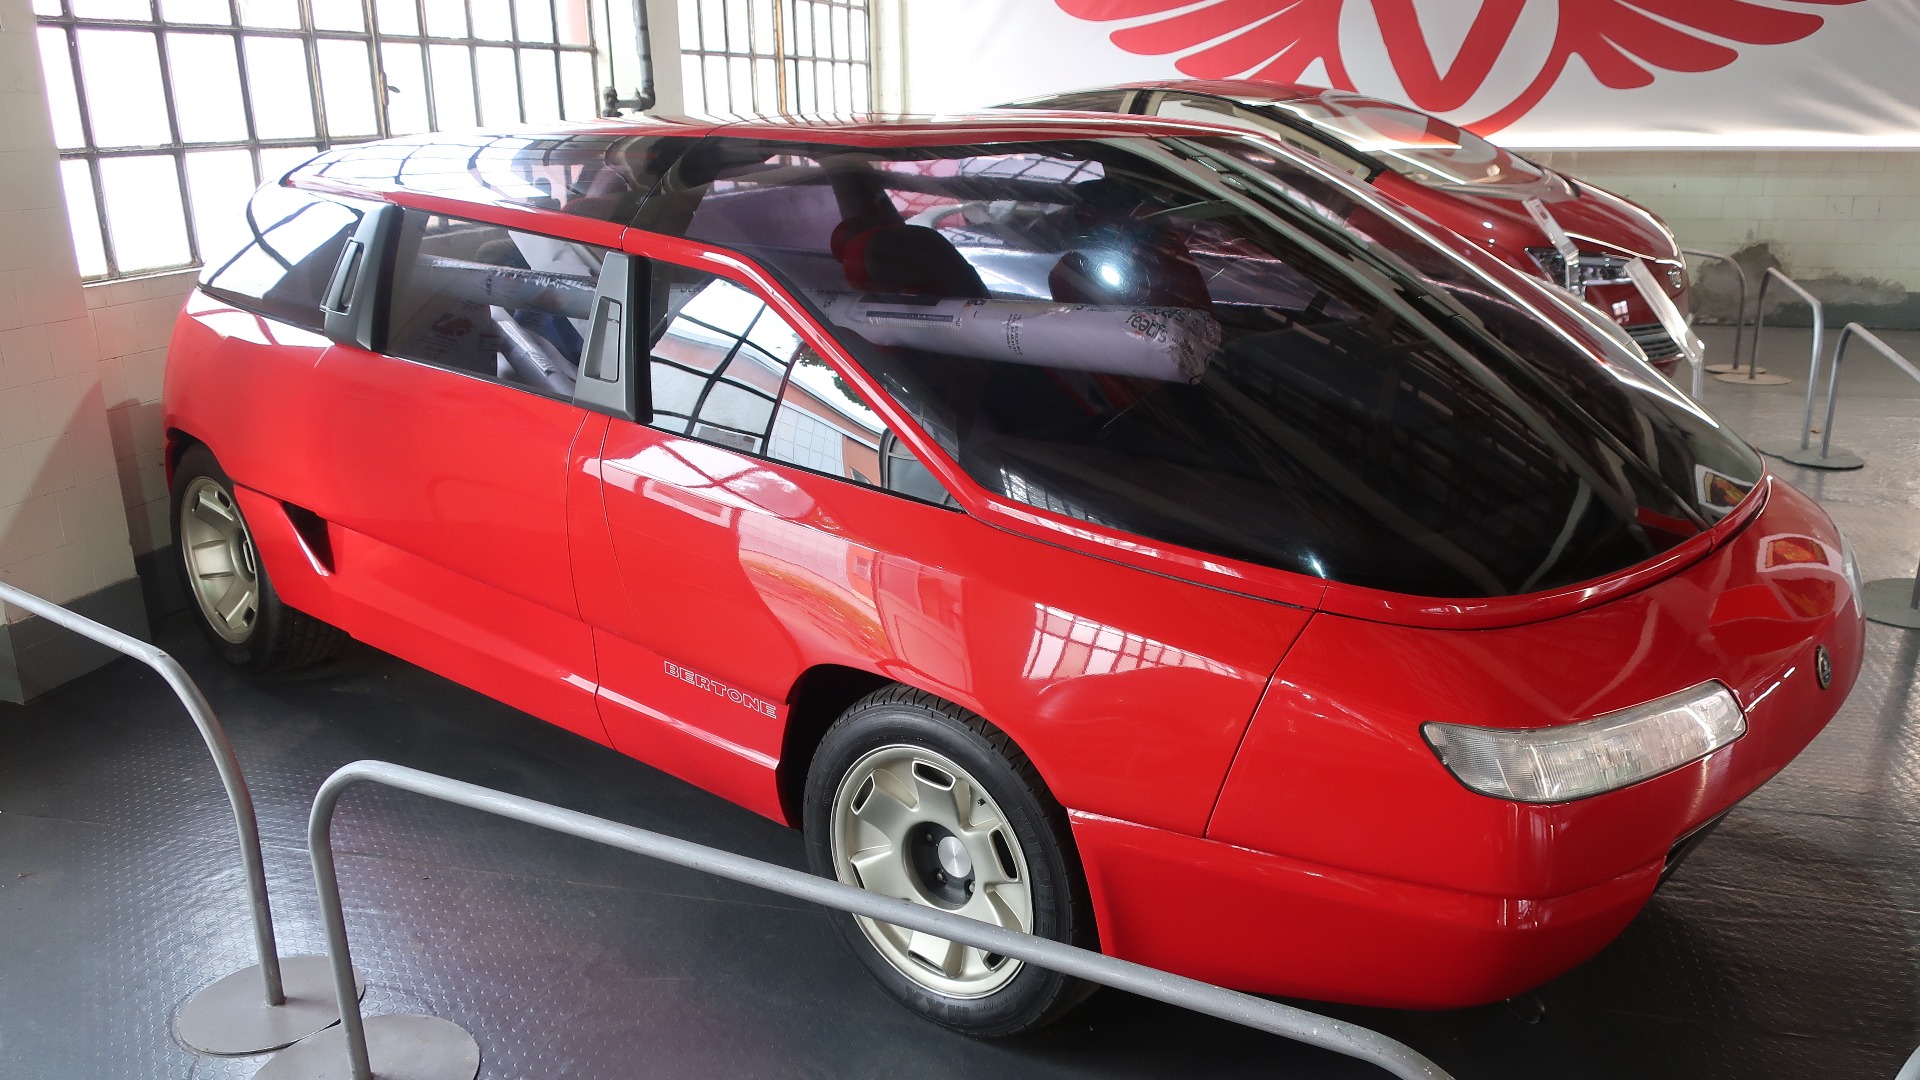 Lamborghini Genesis: Den heftigste minivan noensinne?